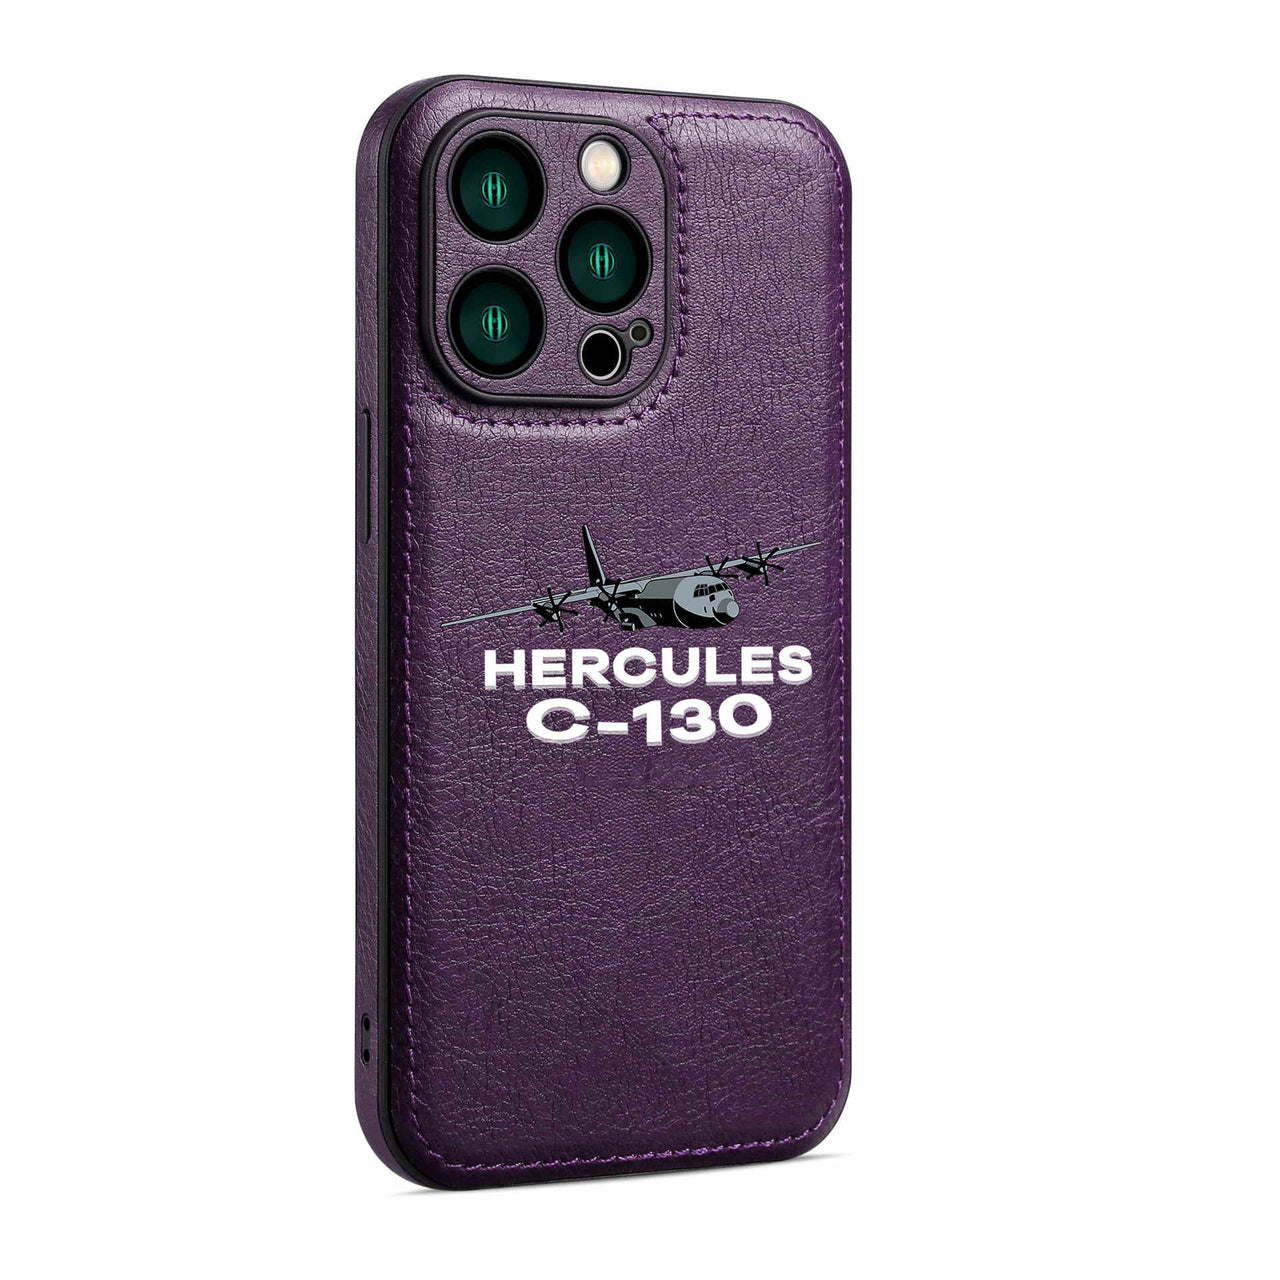 The Hercules C130 Designed Leather iPhone Cases